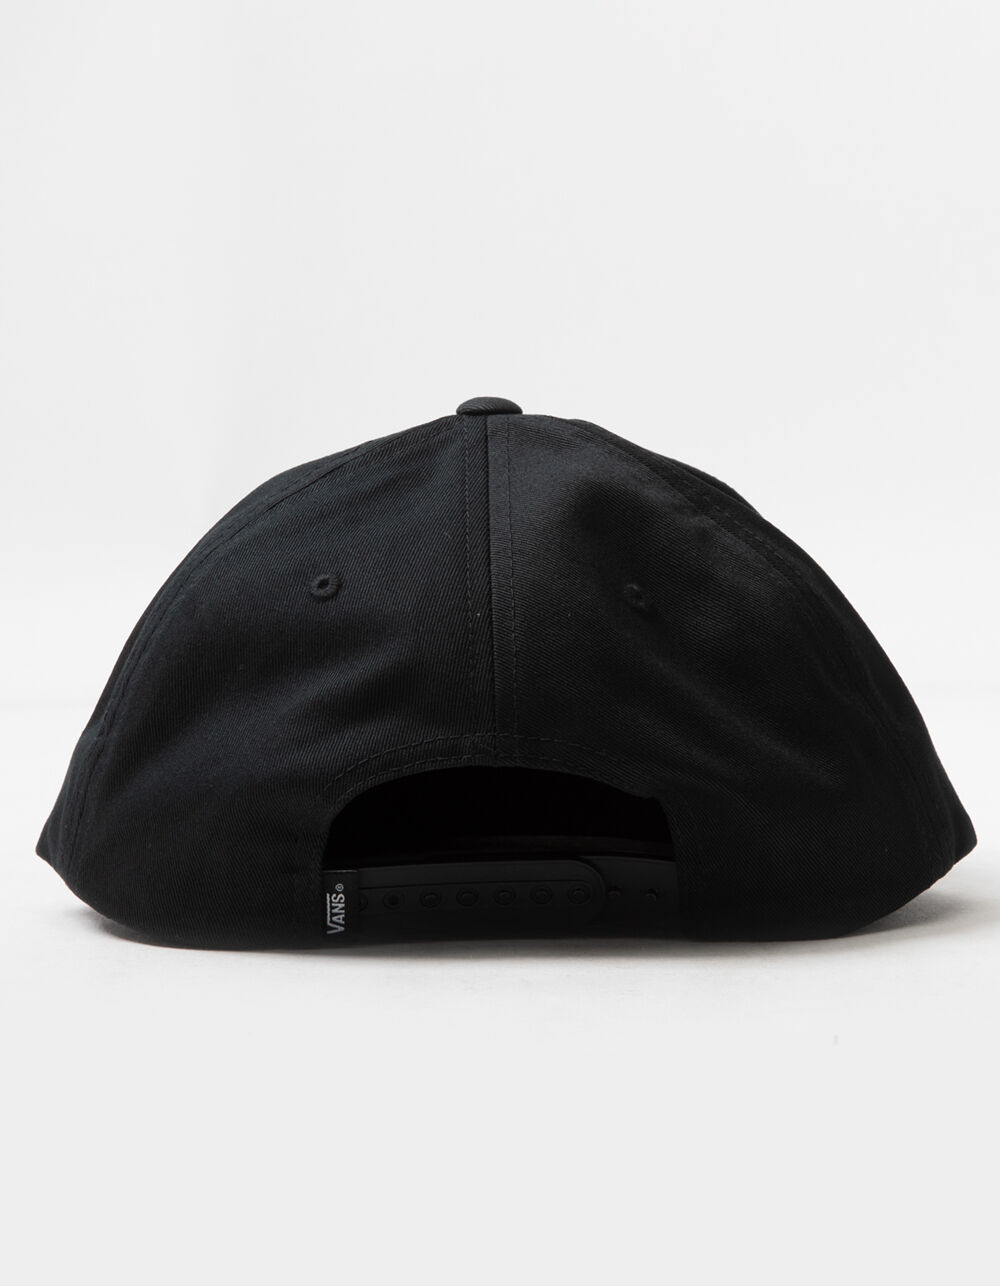 VANS 1966 Authentic Mens Snapback Hat - BLACK | Tillys